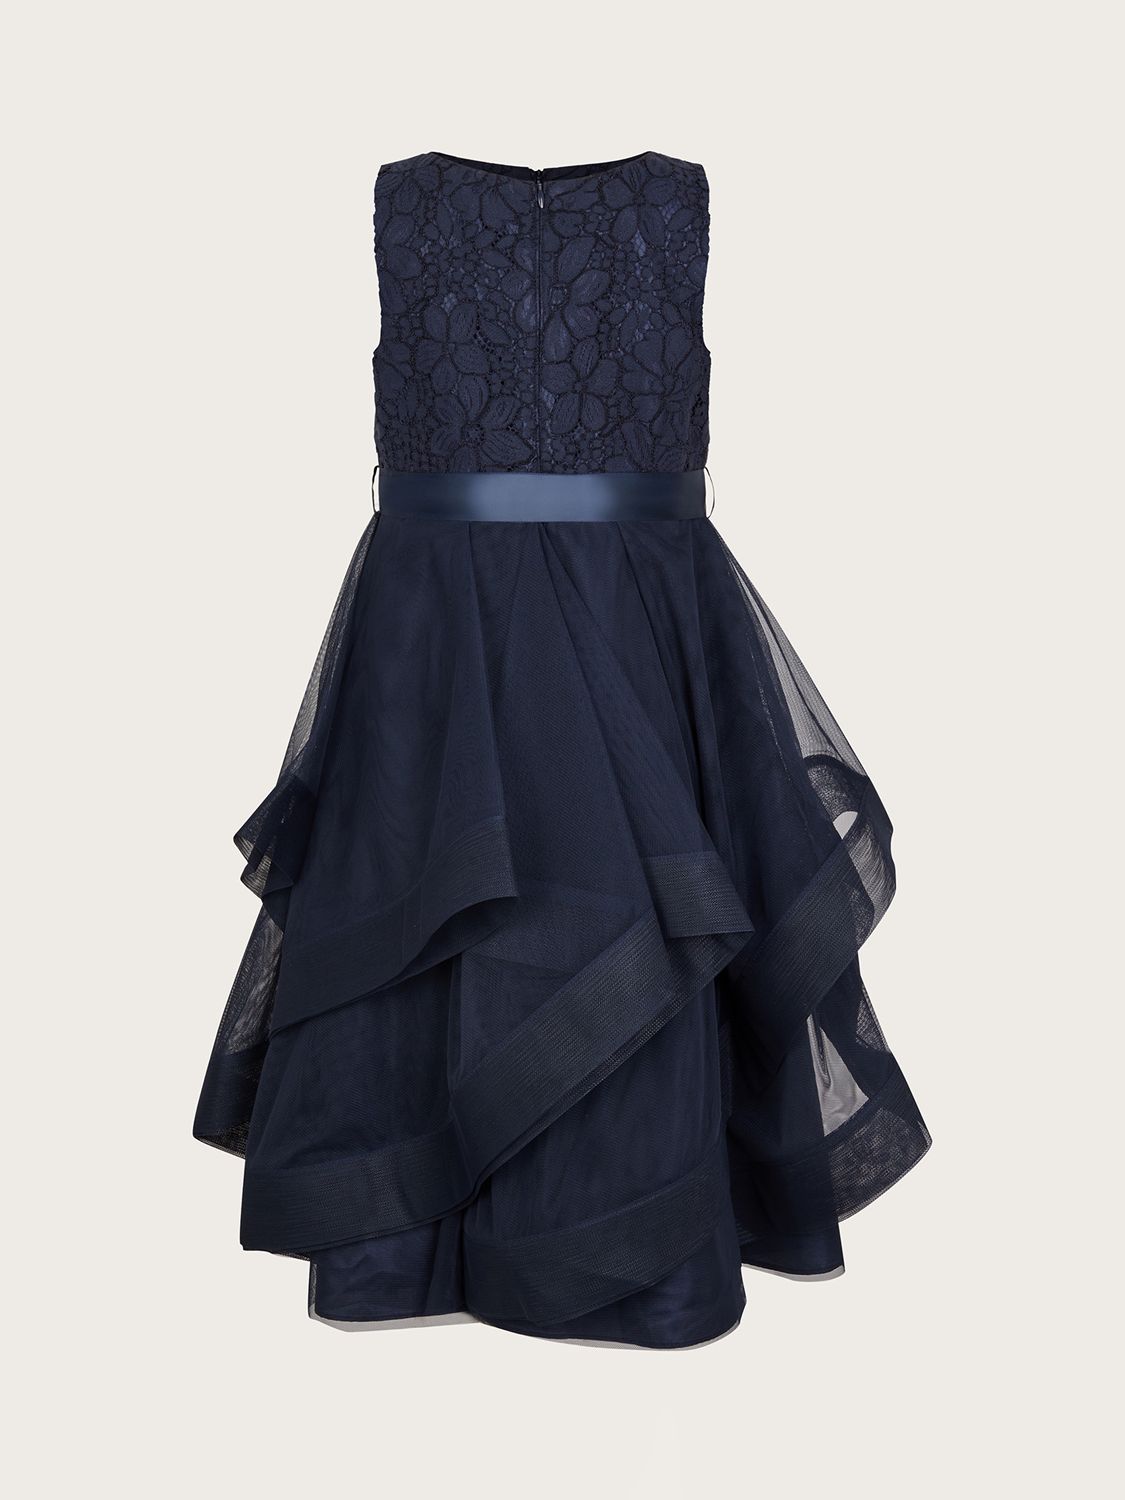 Buy Monsoon KIds' Seville Ruffle Party Dress, Navy Online at johnlewis.com